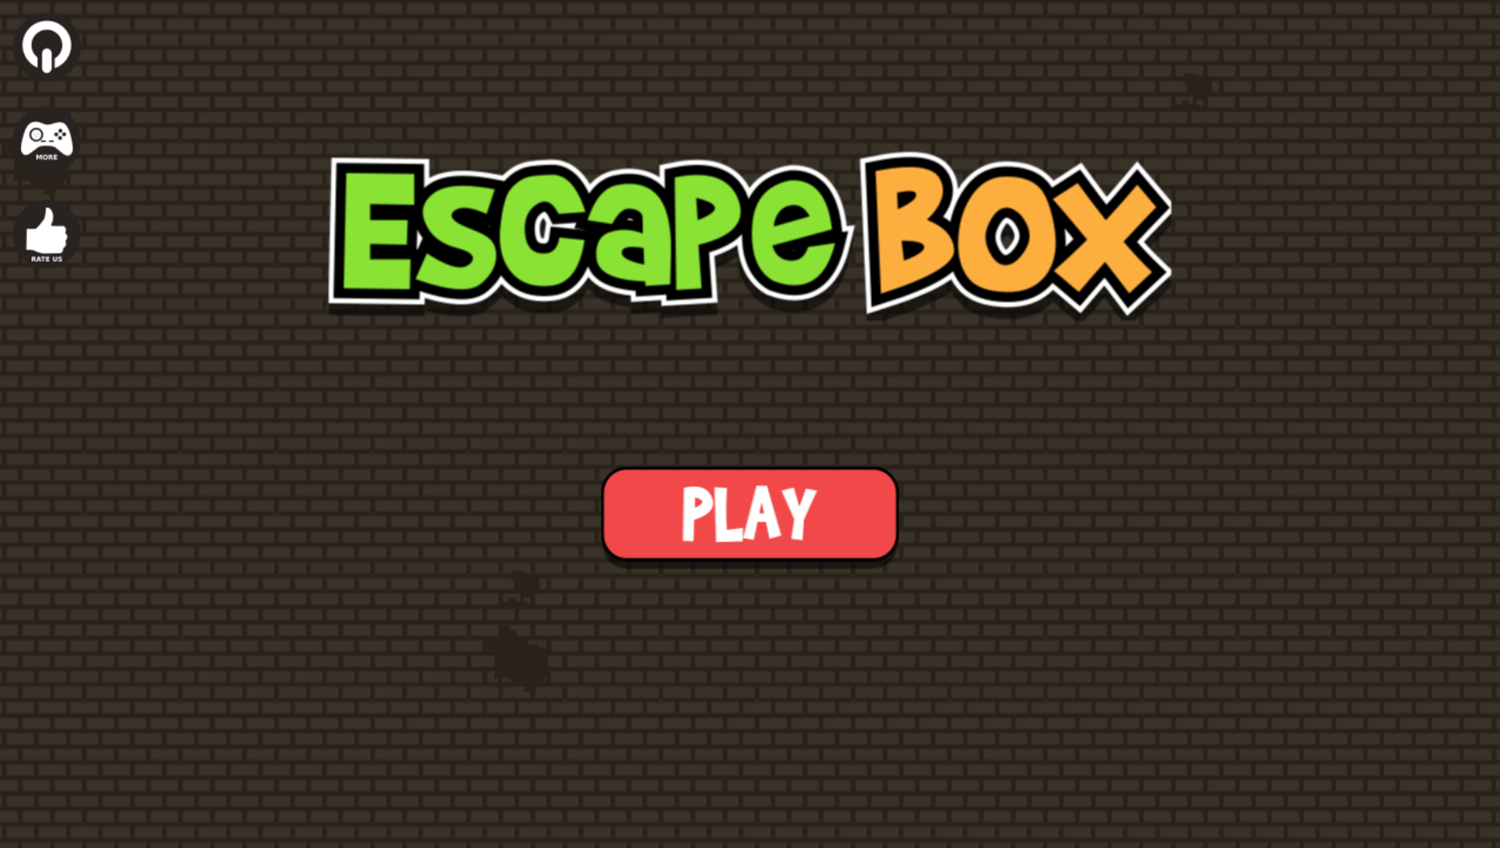 Escape Box Game Welcome Screen Screenshot.